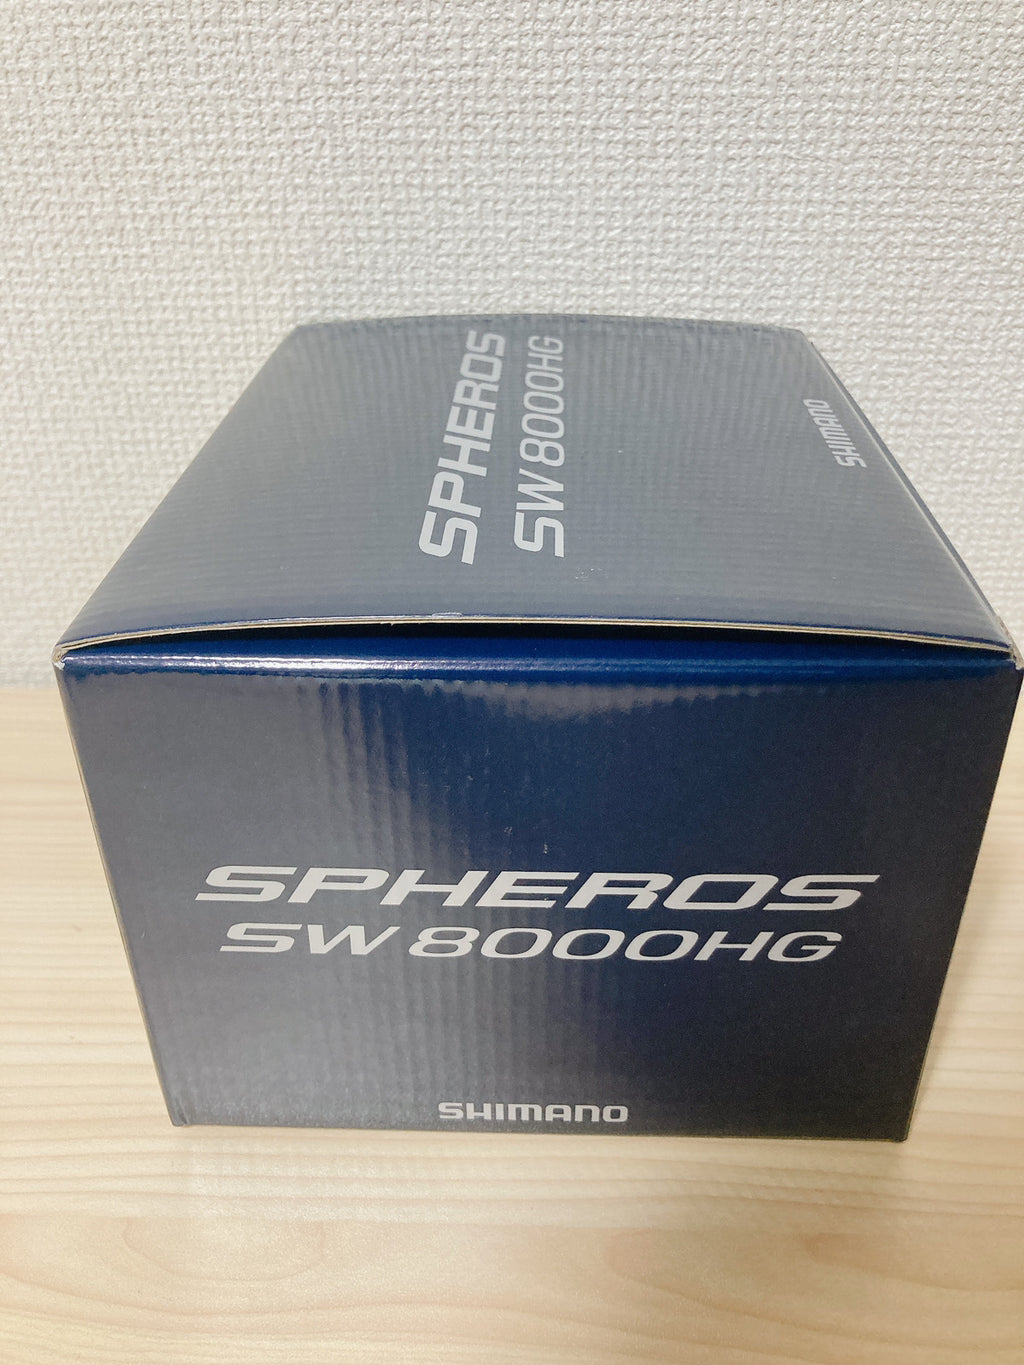 Shimano Spinning Reel 21 SPHEROS SW 8000HG Gear Ratio 5.6:1 Fishing Reel IN  BOX